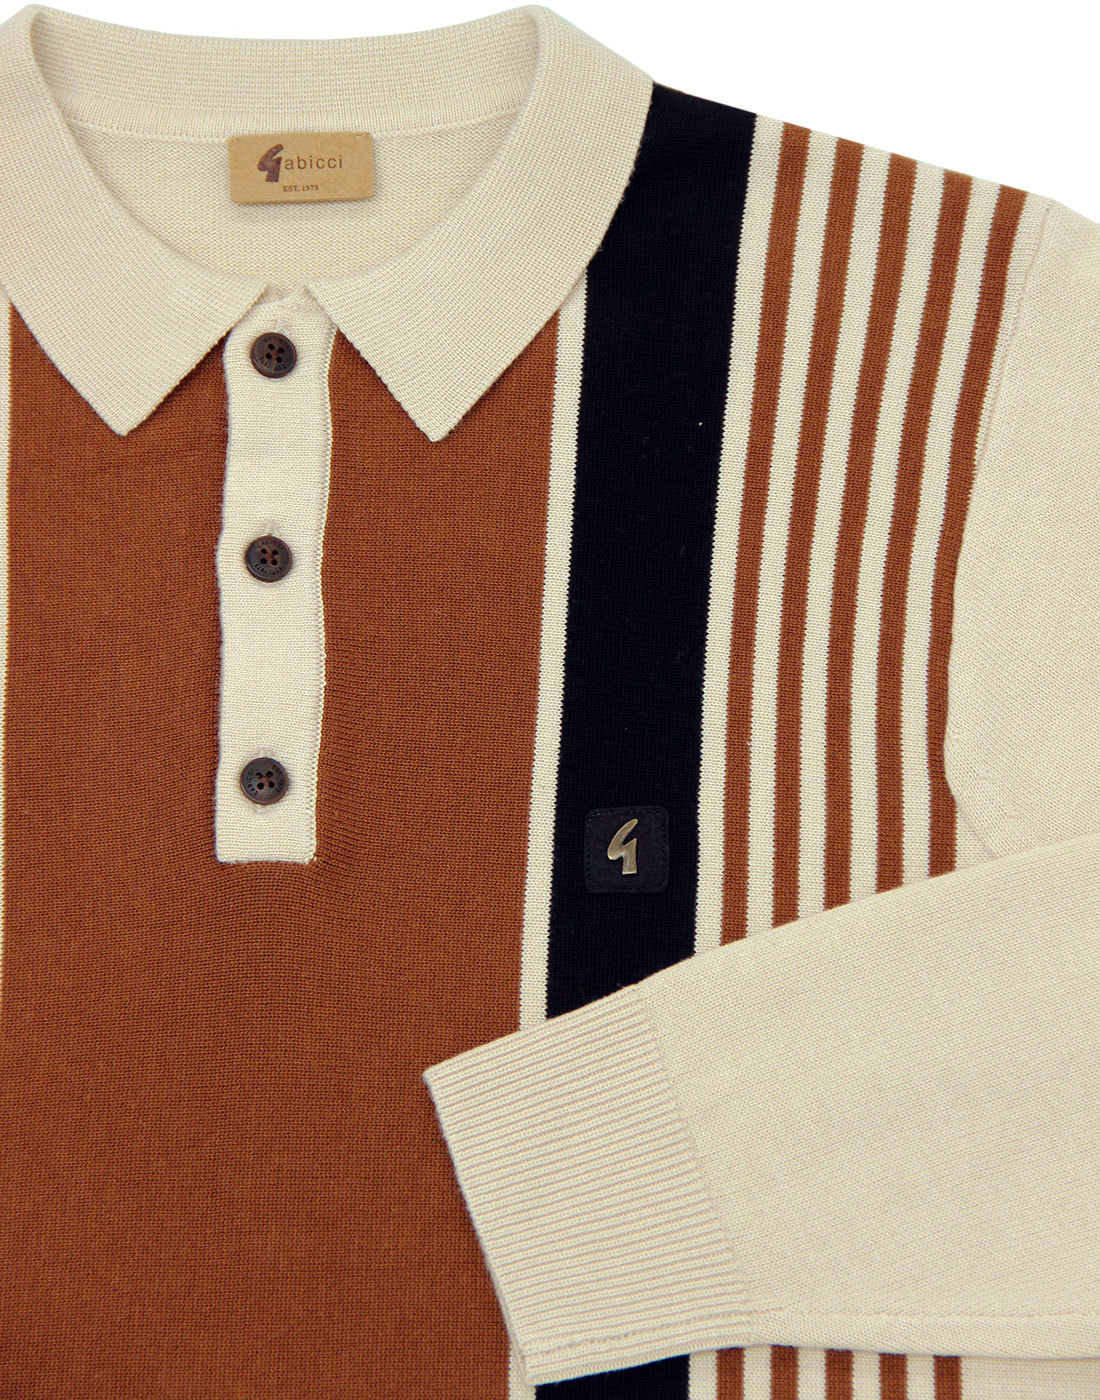 GABICCI VINTAGE Searle 60s Multi Stripe Knitted Polo in Oat